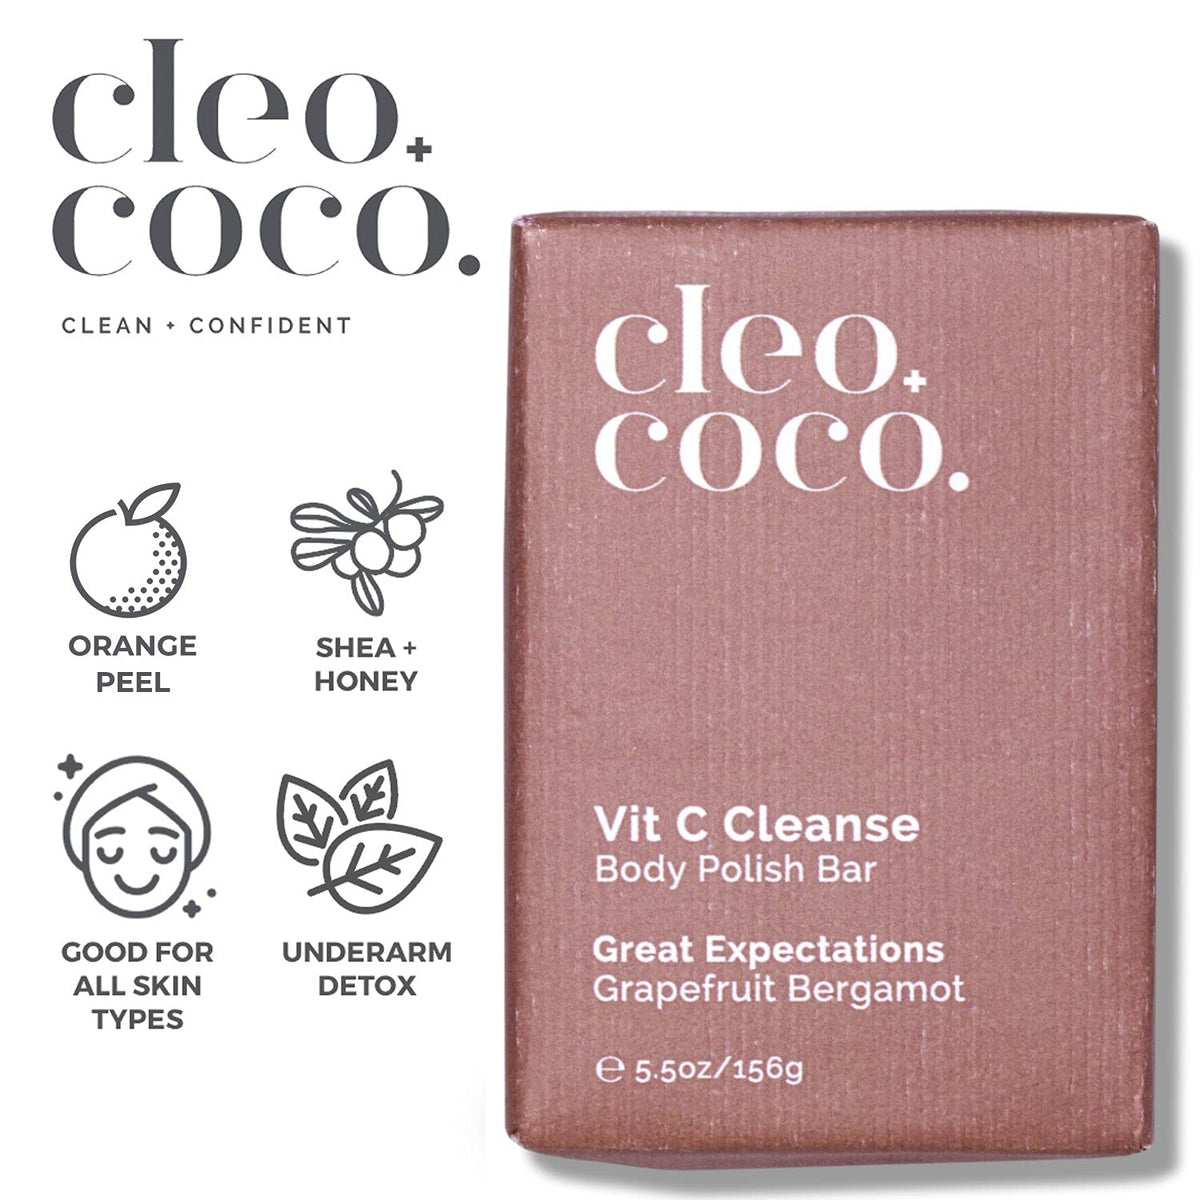 Cleo Coco Vit C Cleanse Body polish Bar